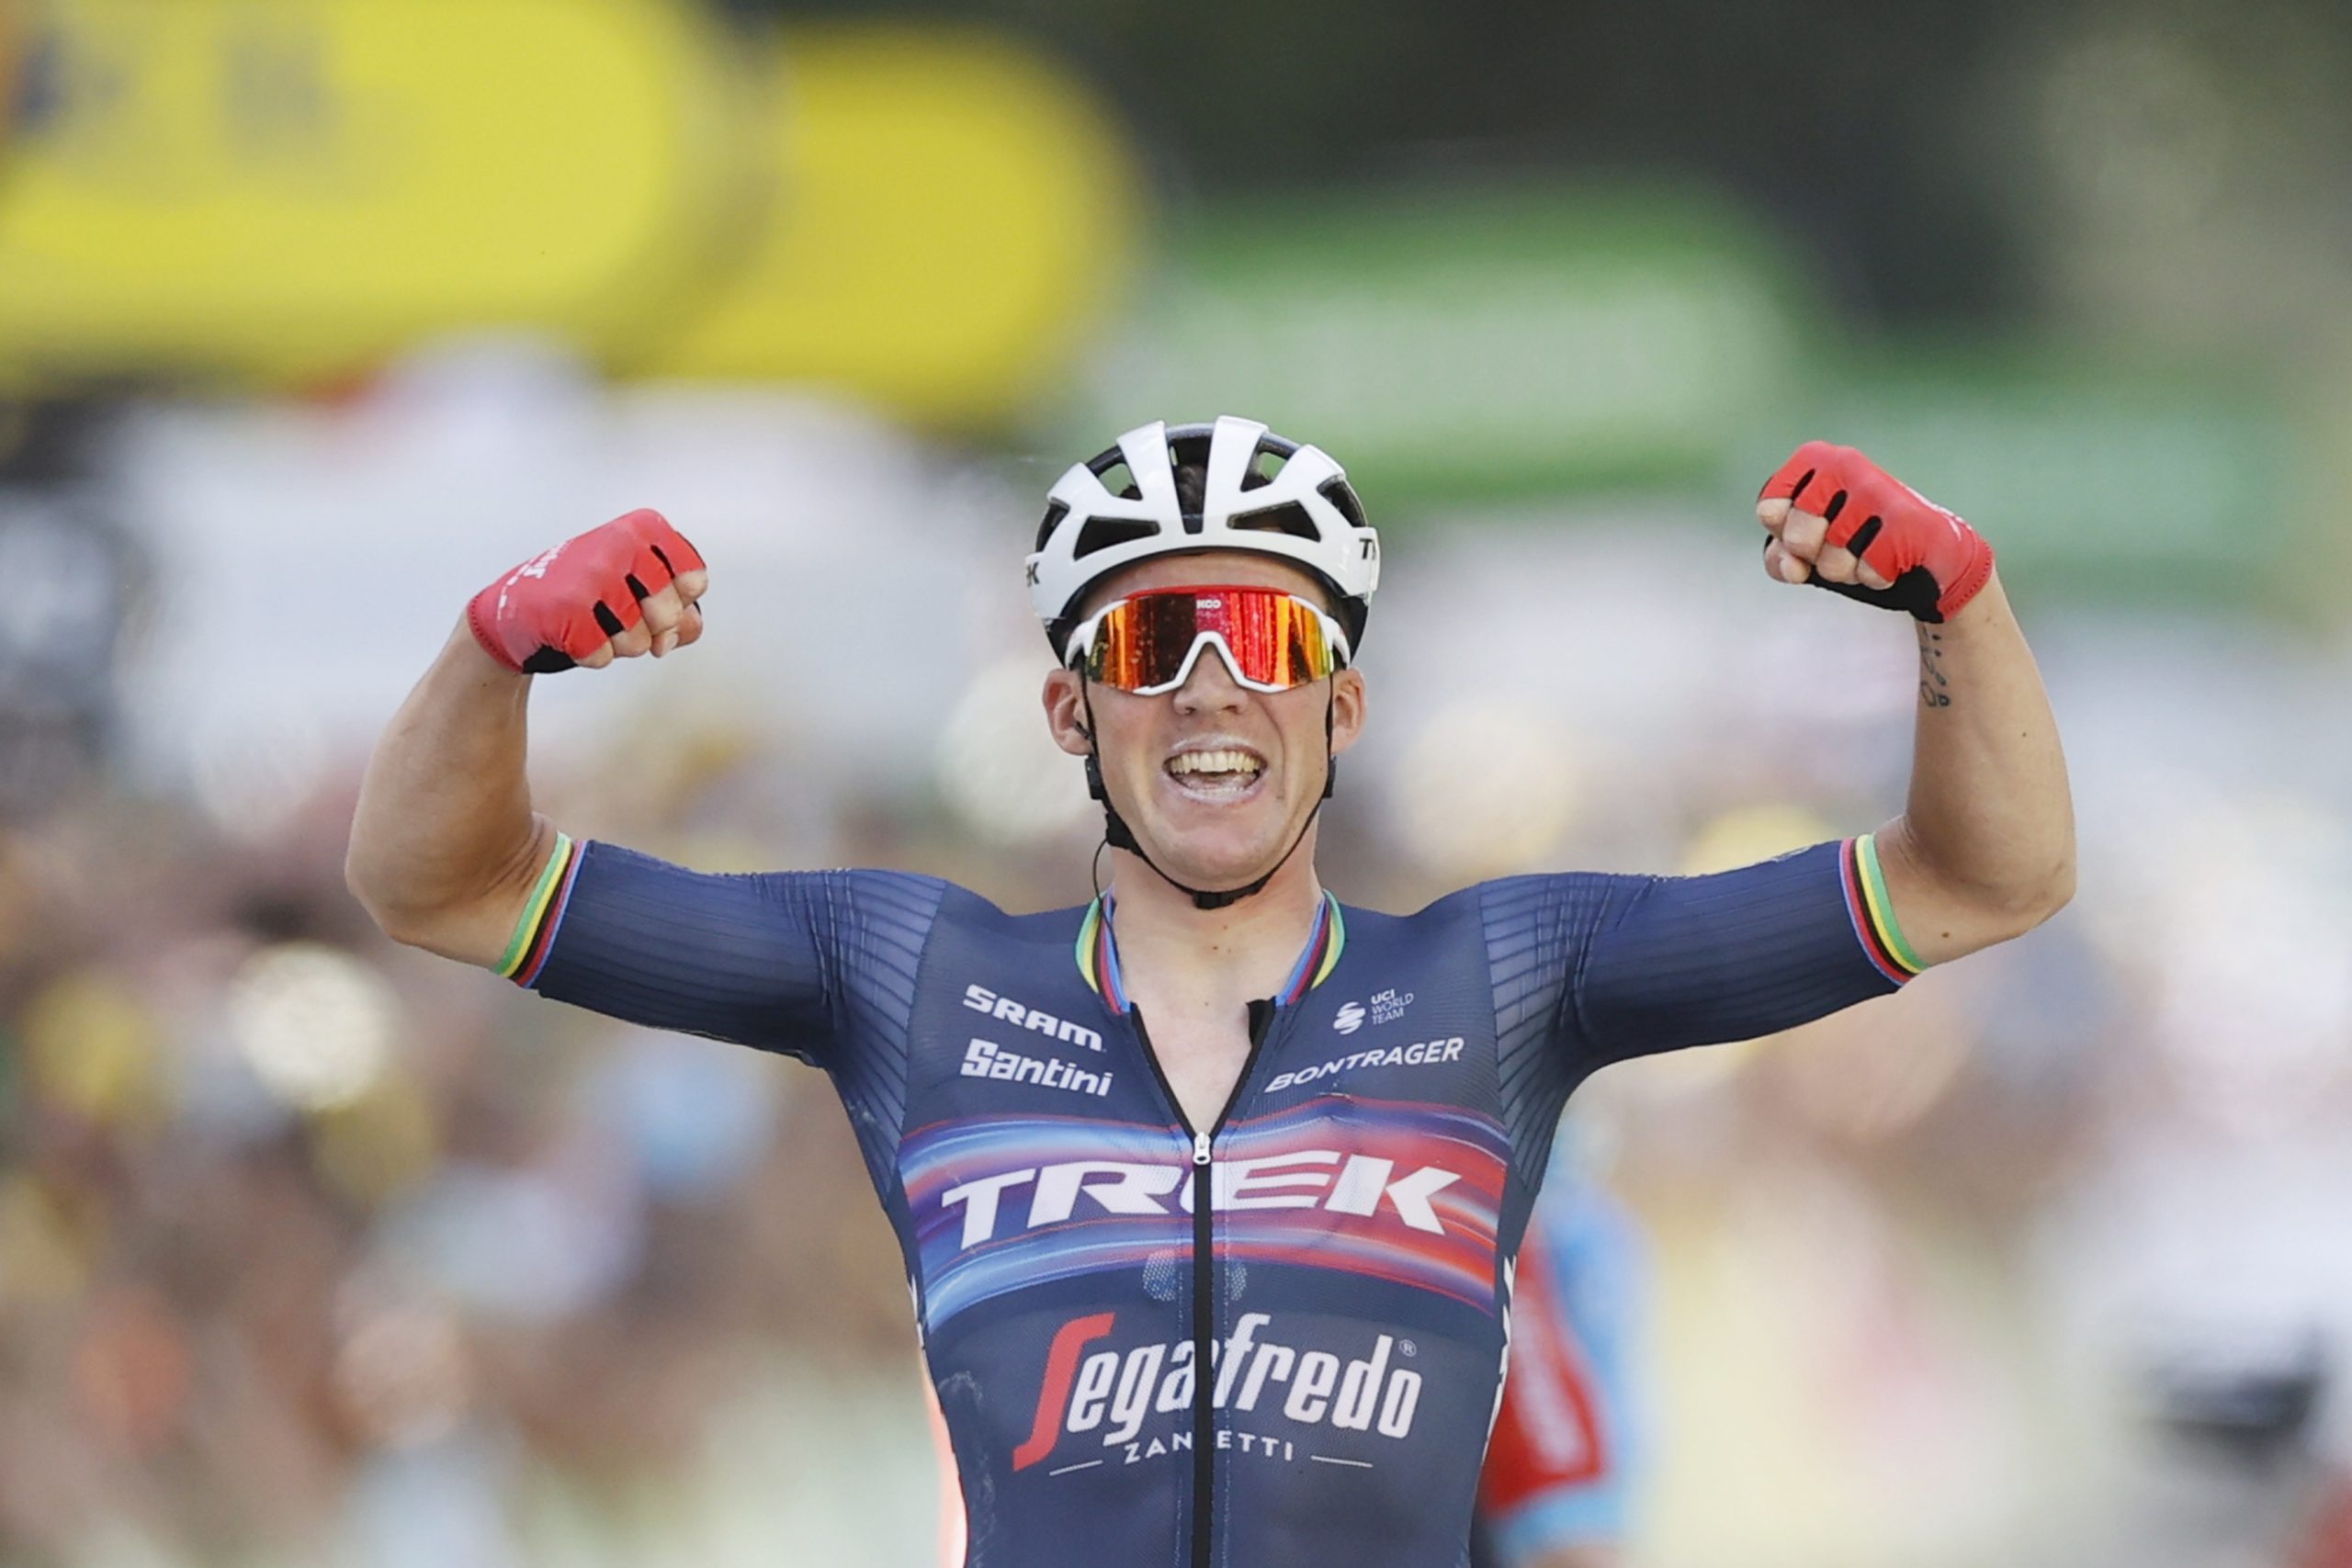 Former world champion Pedersen won a breakaway stage in the Tour de France